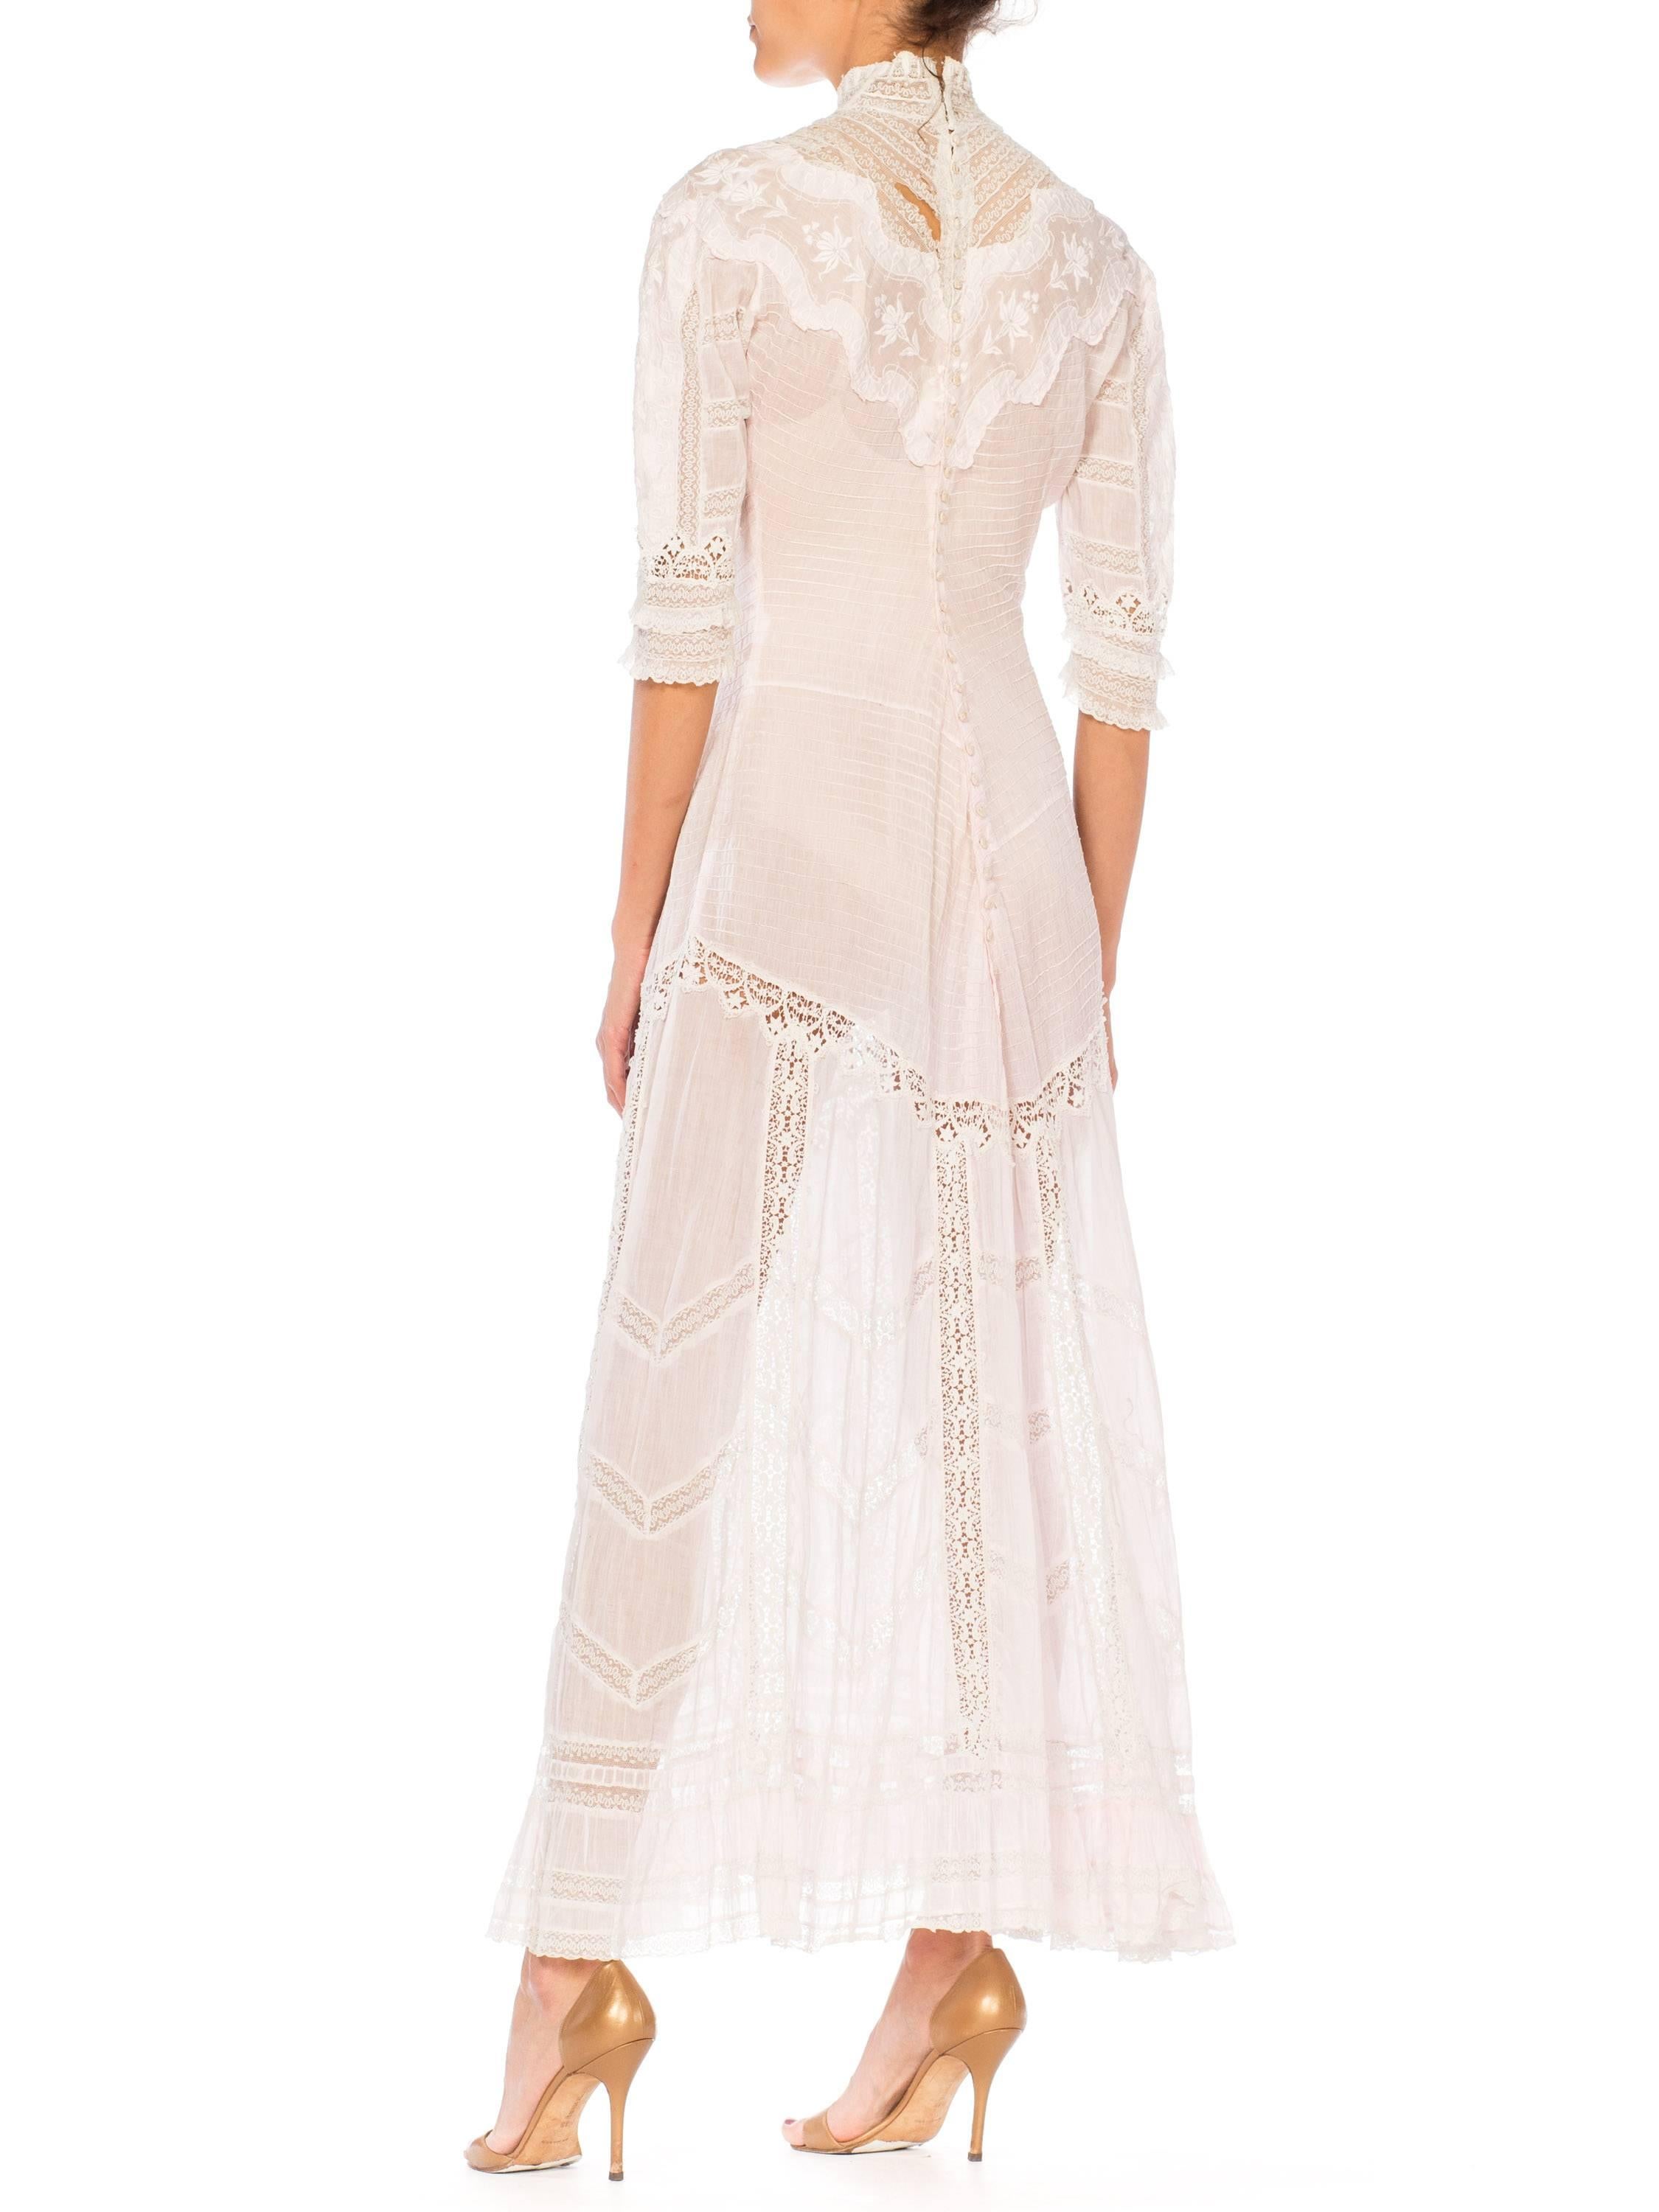 Belle Epoque Swan Neck Princess Line Victorian Organic Cotton and Lace Tea Dress 13